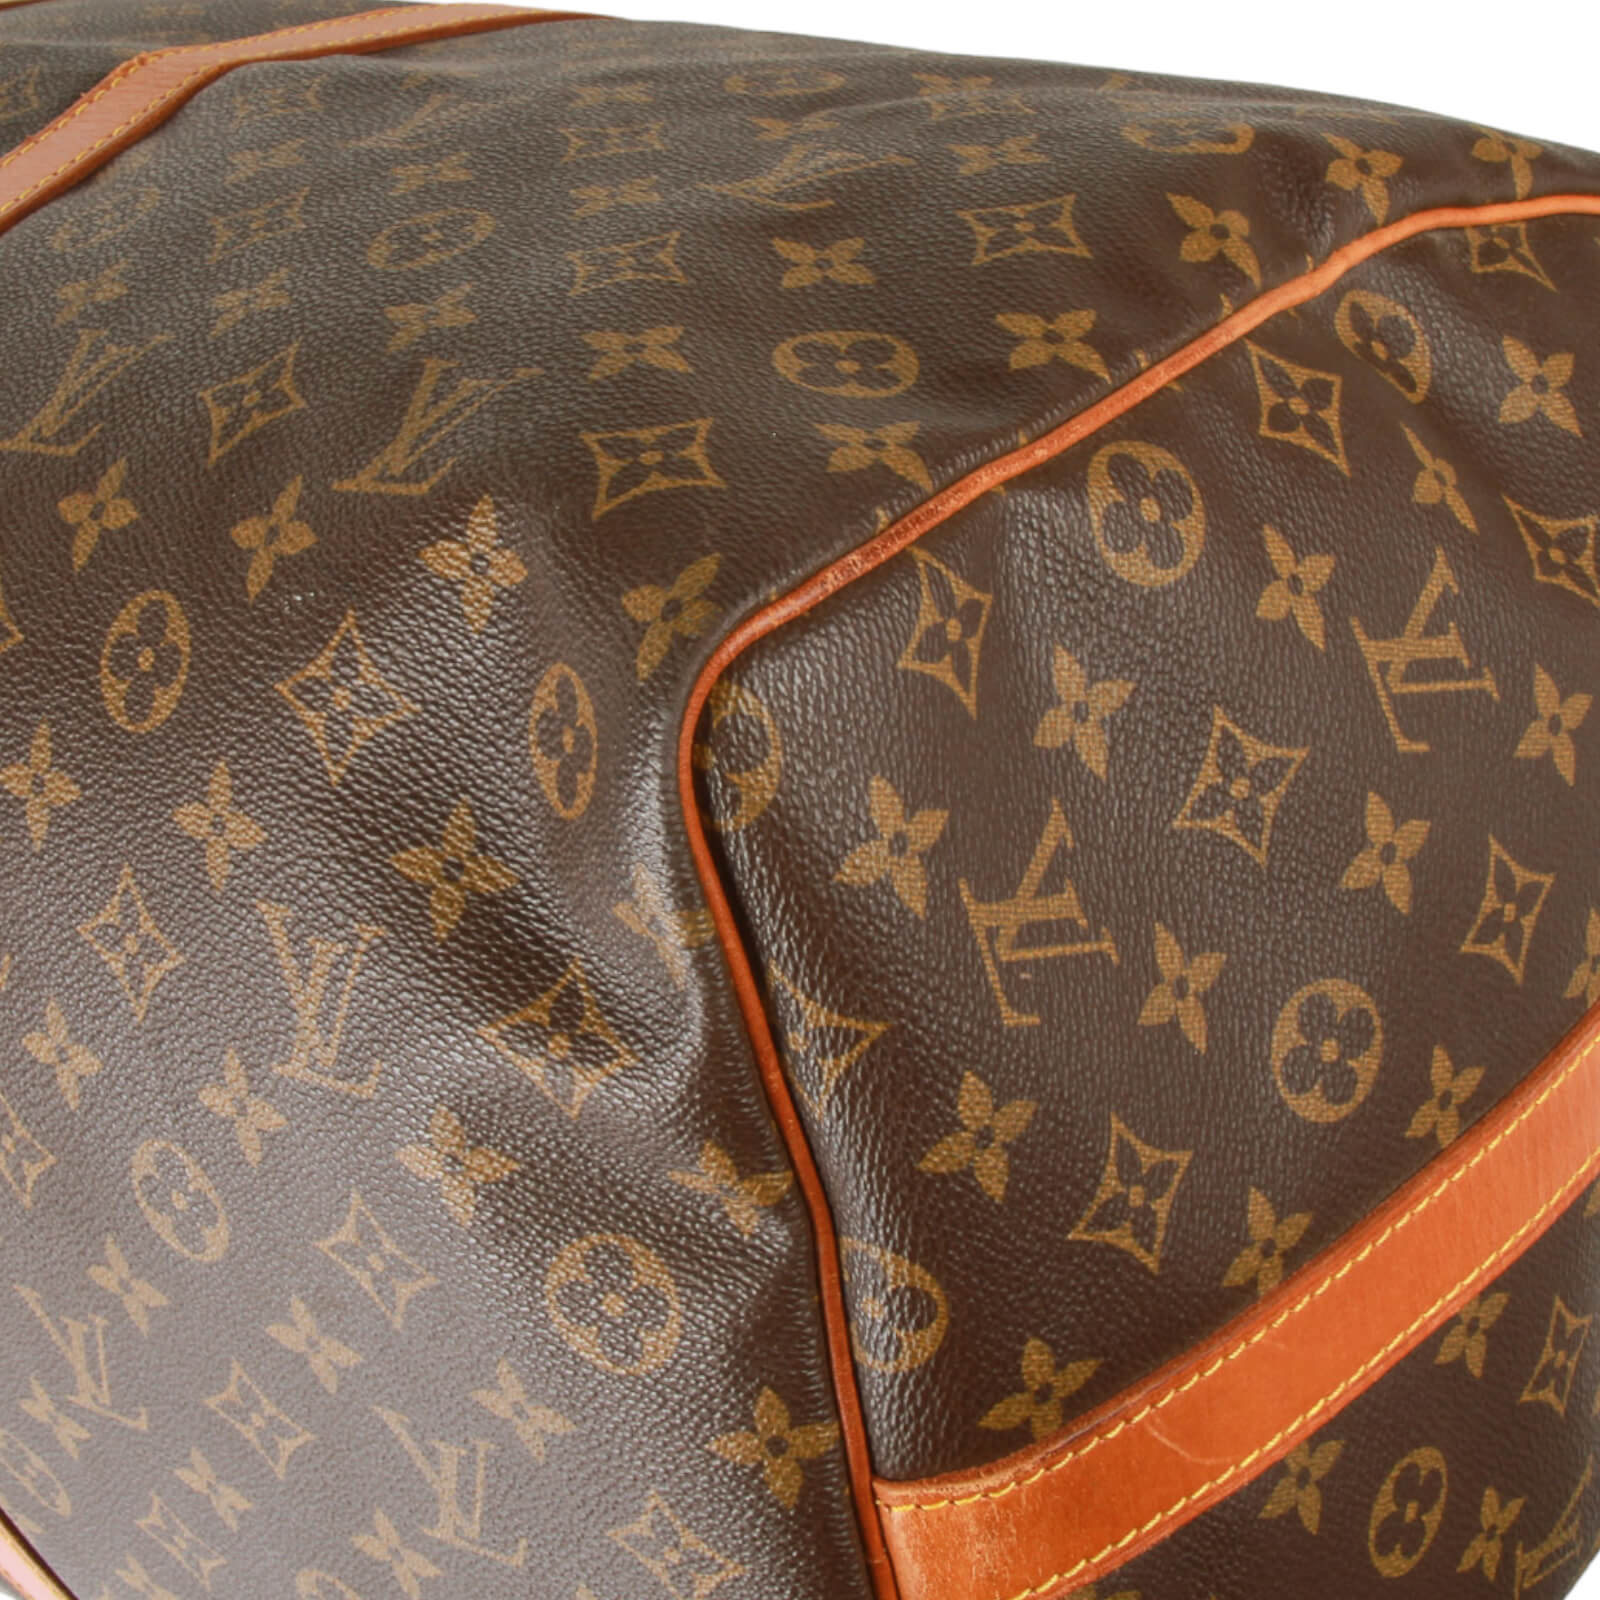 Louis Vuitton Keepall 60 Bandouliere Travel Shoulder Bag